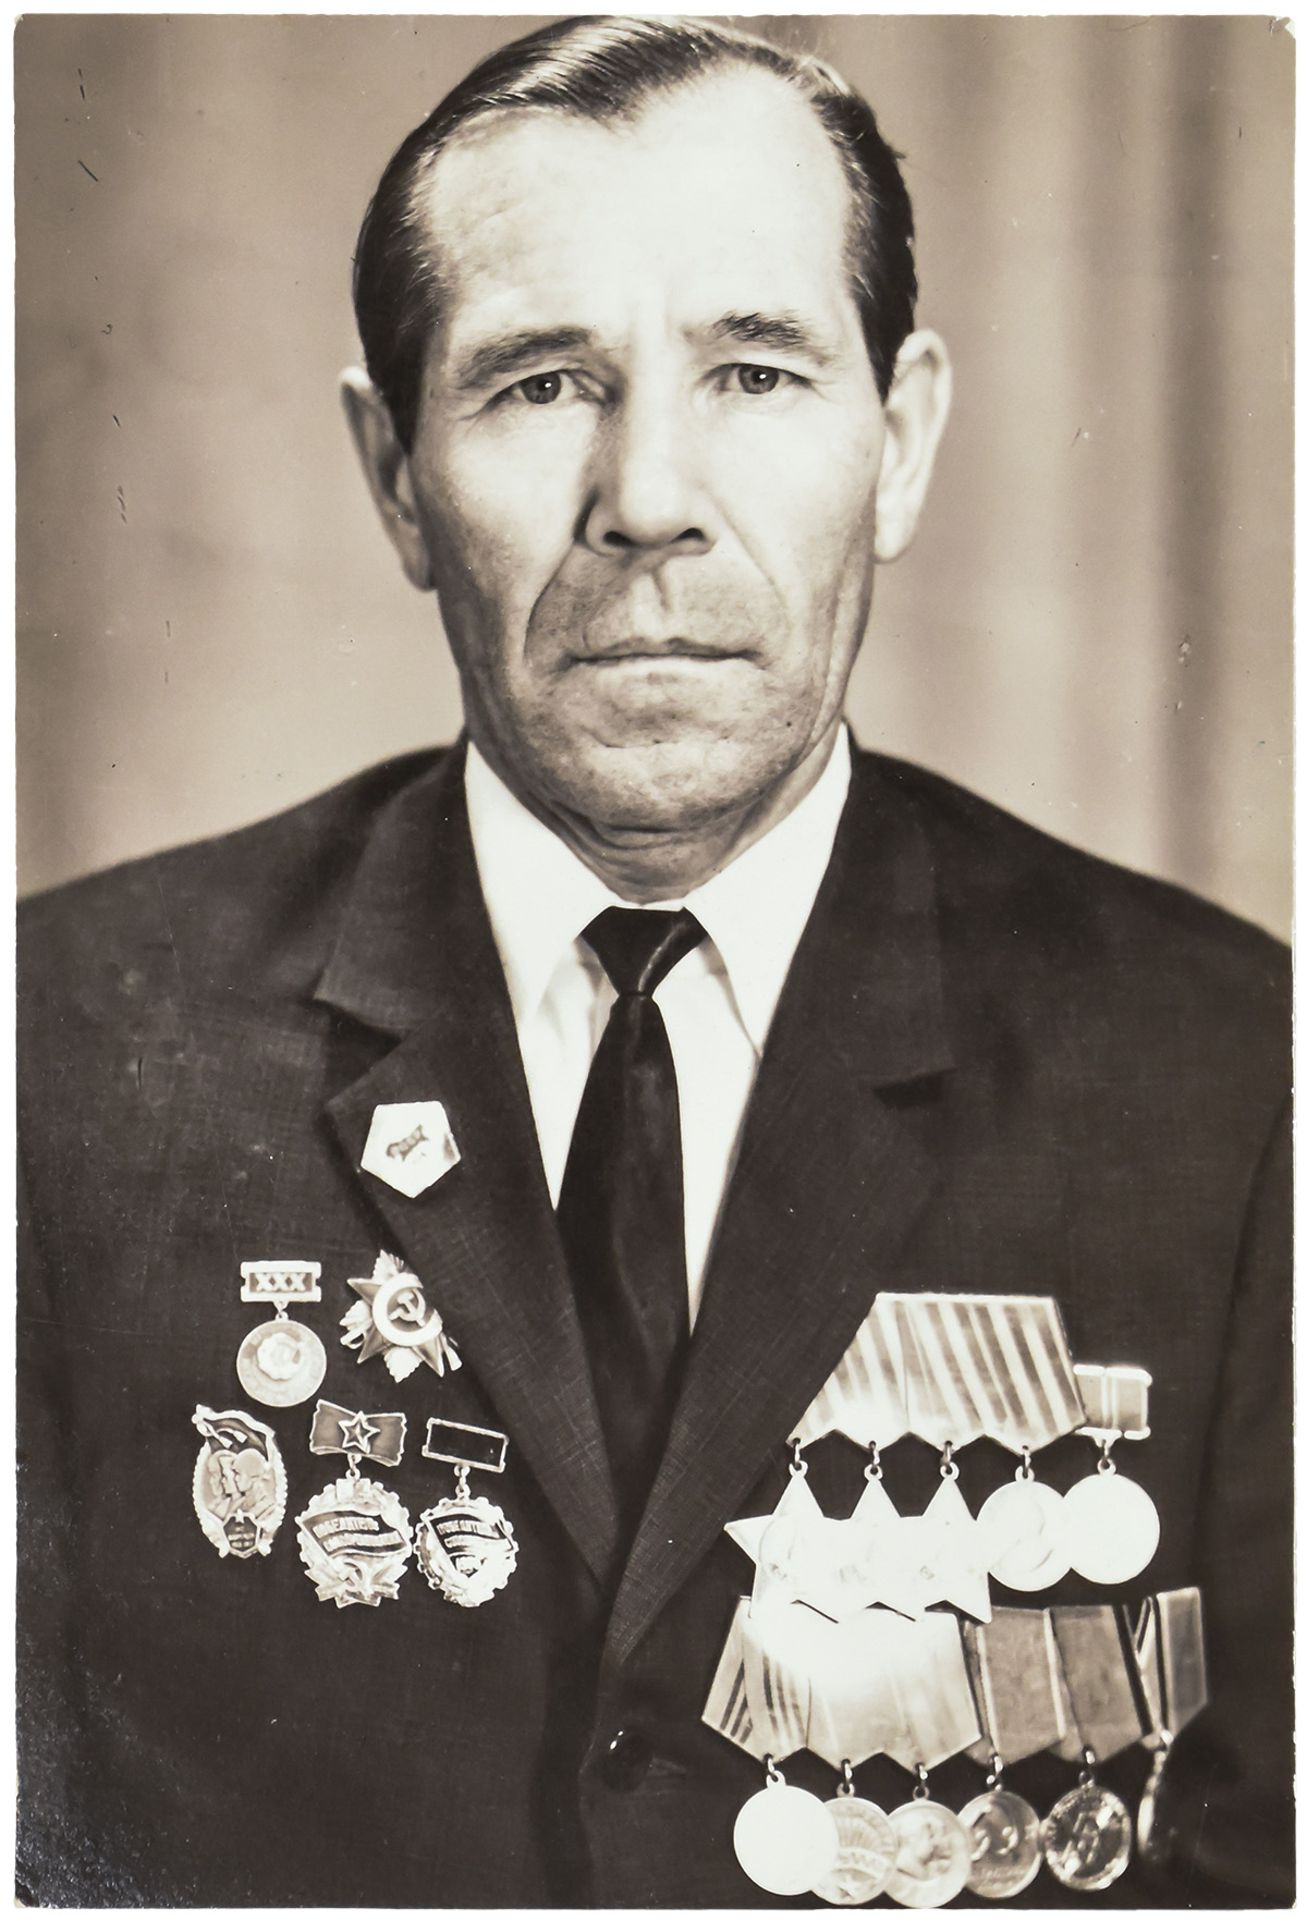 Portrait of Slava Georgy Basyrov. Photograph. 1970s. 9x6 cm.